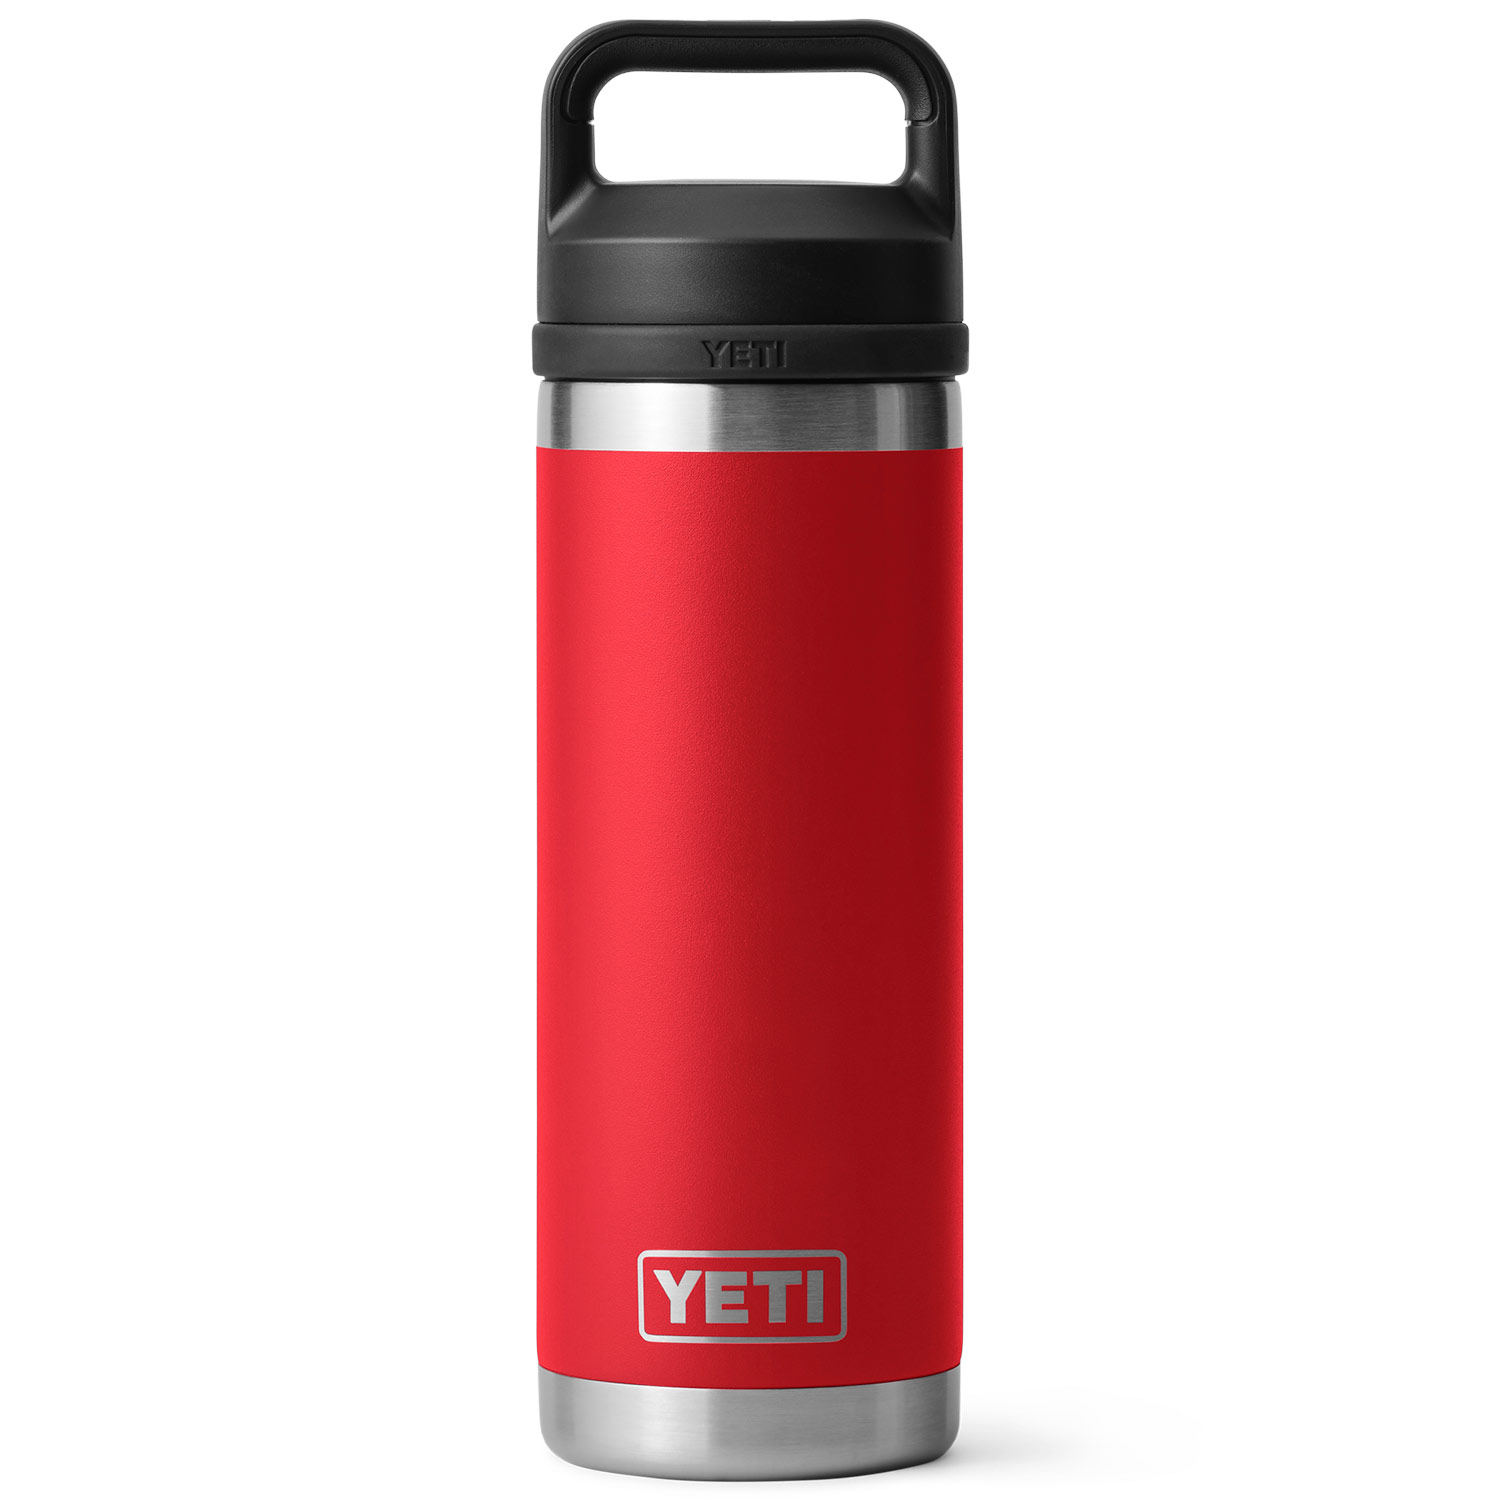 YETI Rambler Vacuum Bottle - 18 fl. oz.